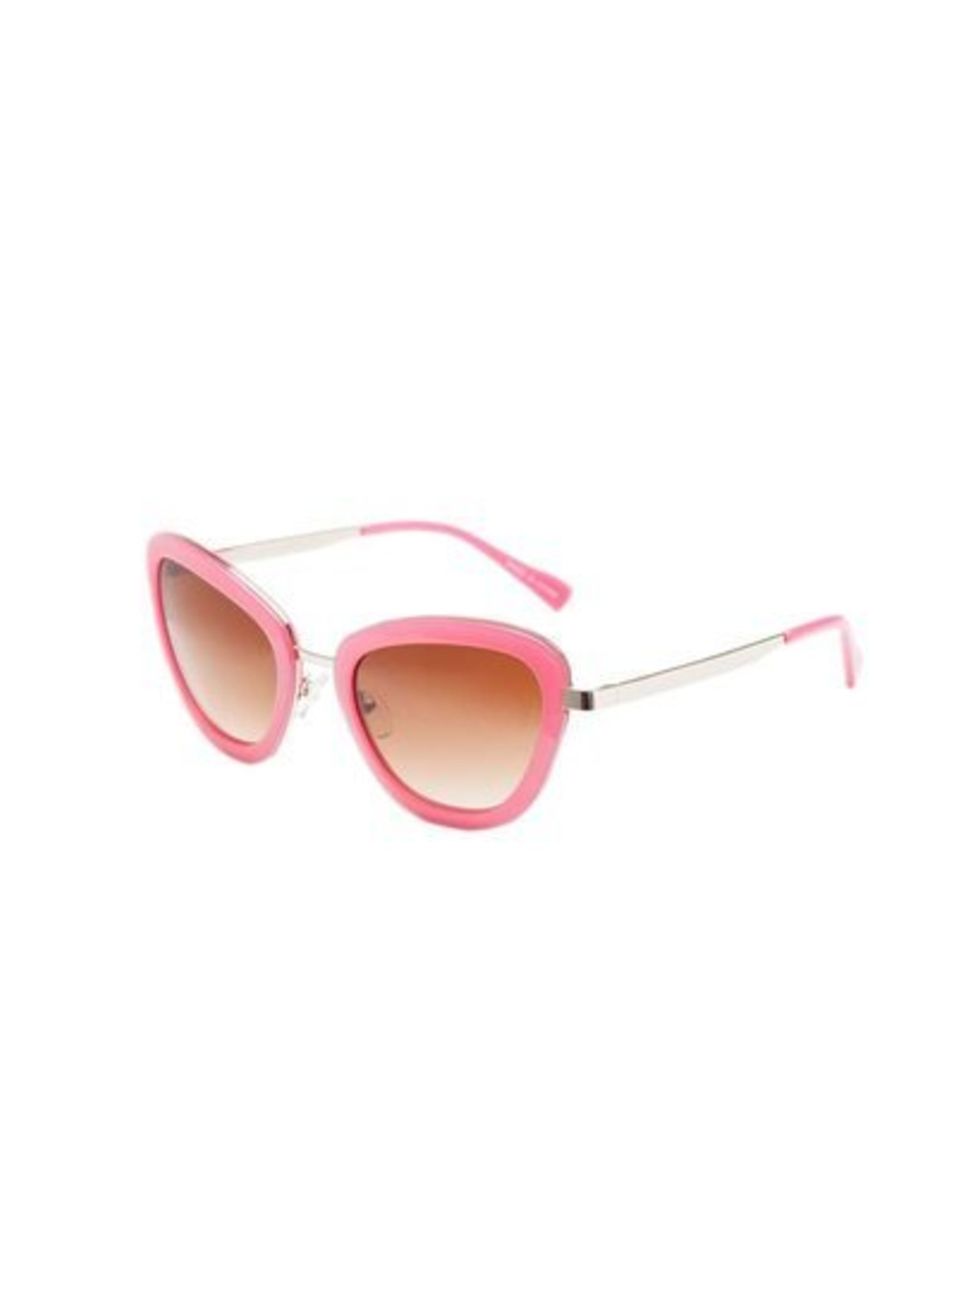 These retro sunglasses will lend a punch of colour to Designer Charlotte Wallace's wardrobe.

Uterqüe sunglasses, £69